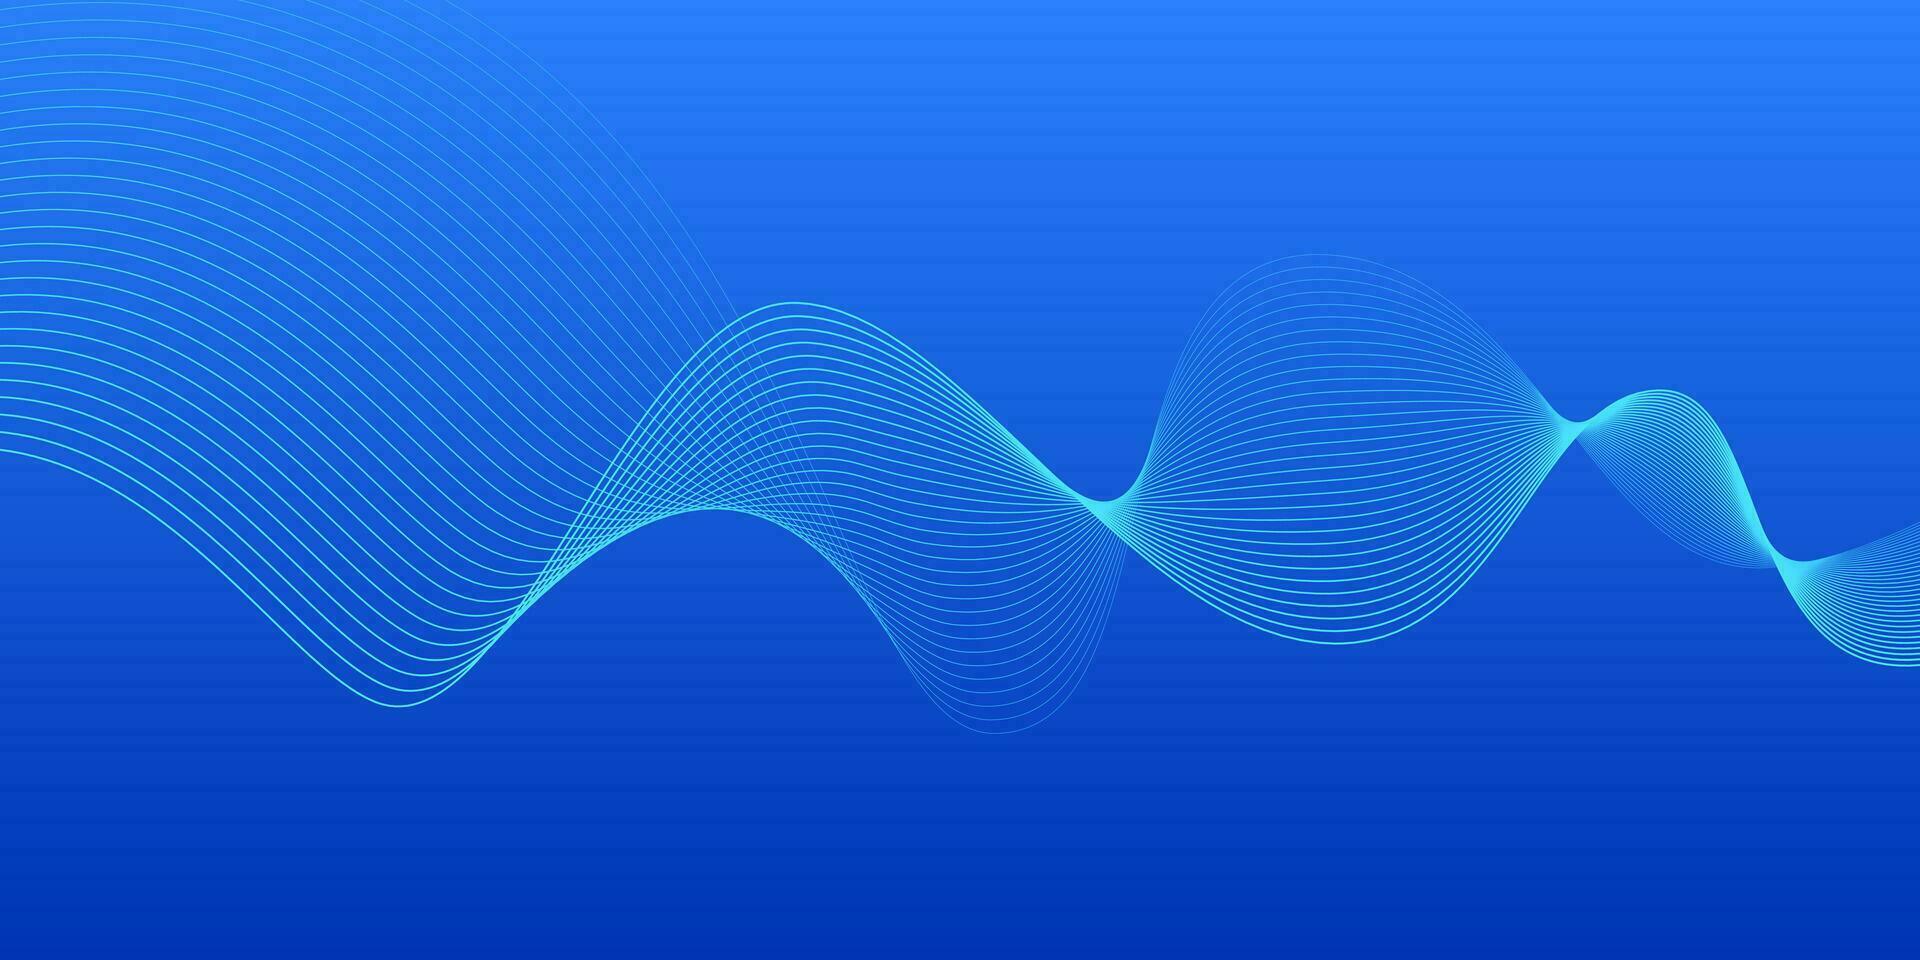 blå abstrakt bakgrund med dynamisk ljus Vinka rader vektor